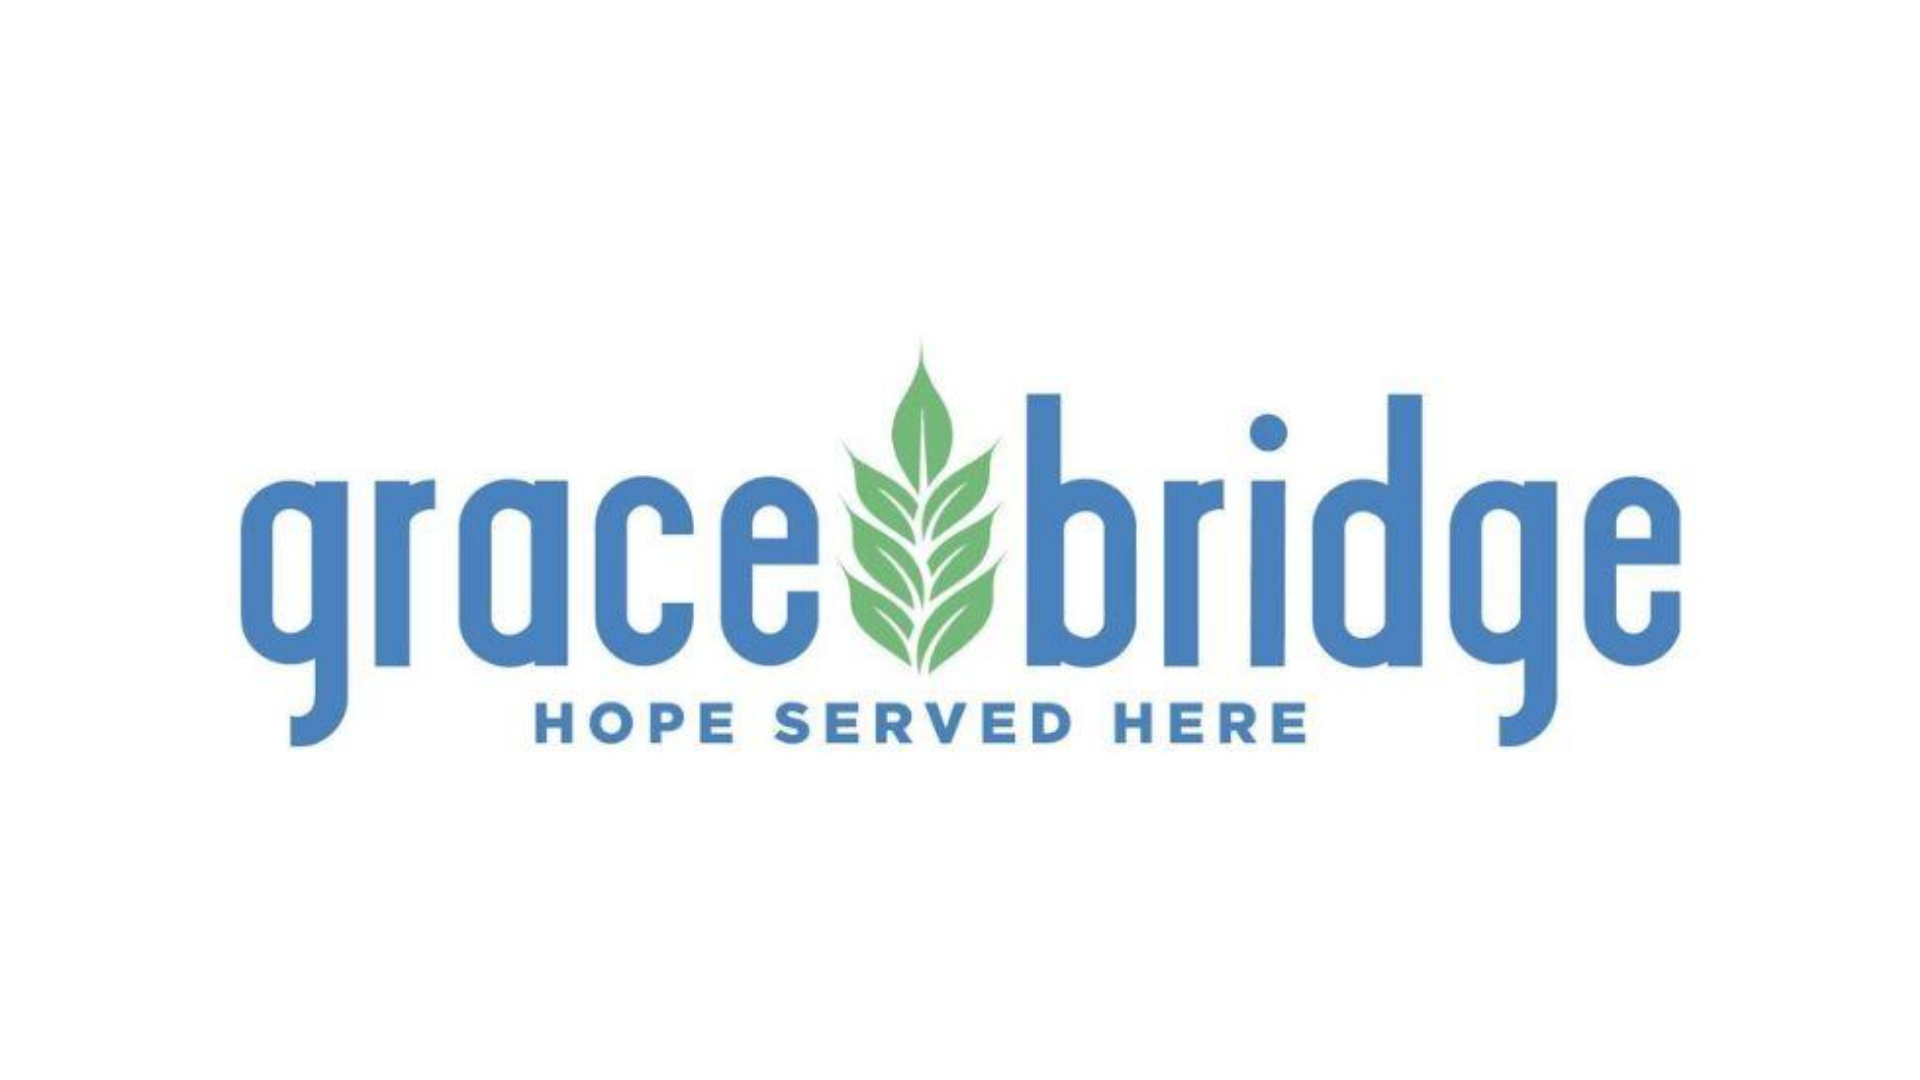 Grace Bridge Event image